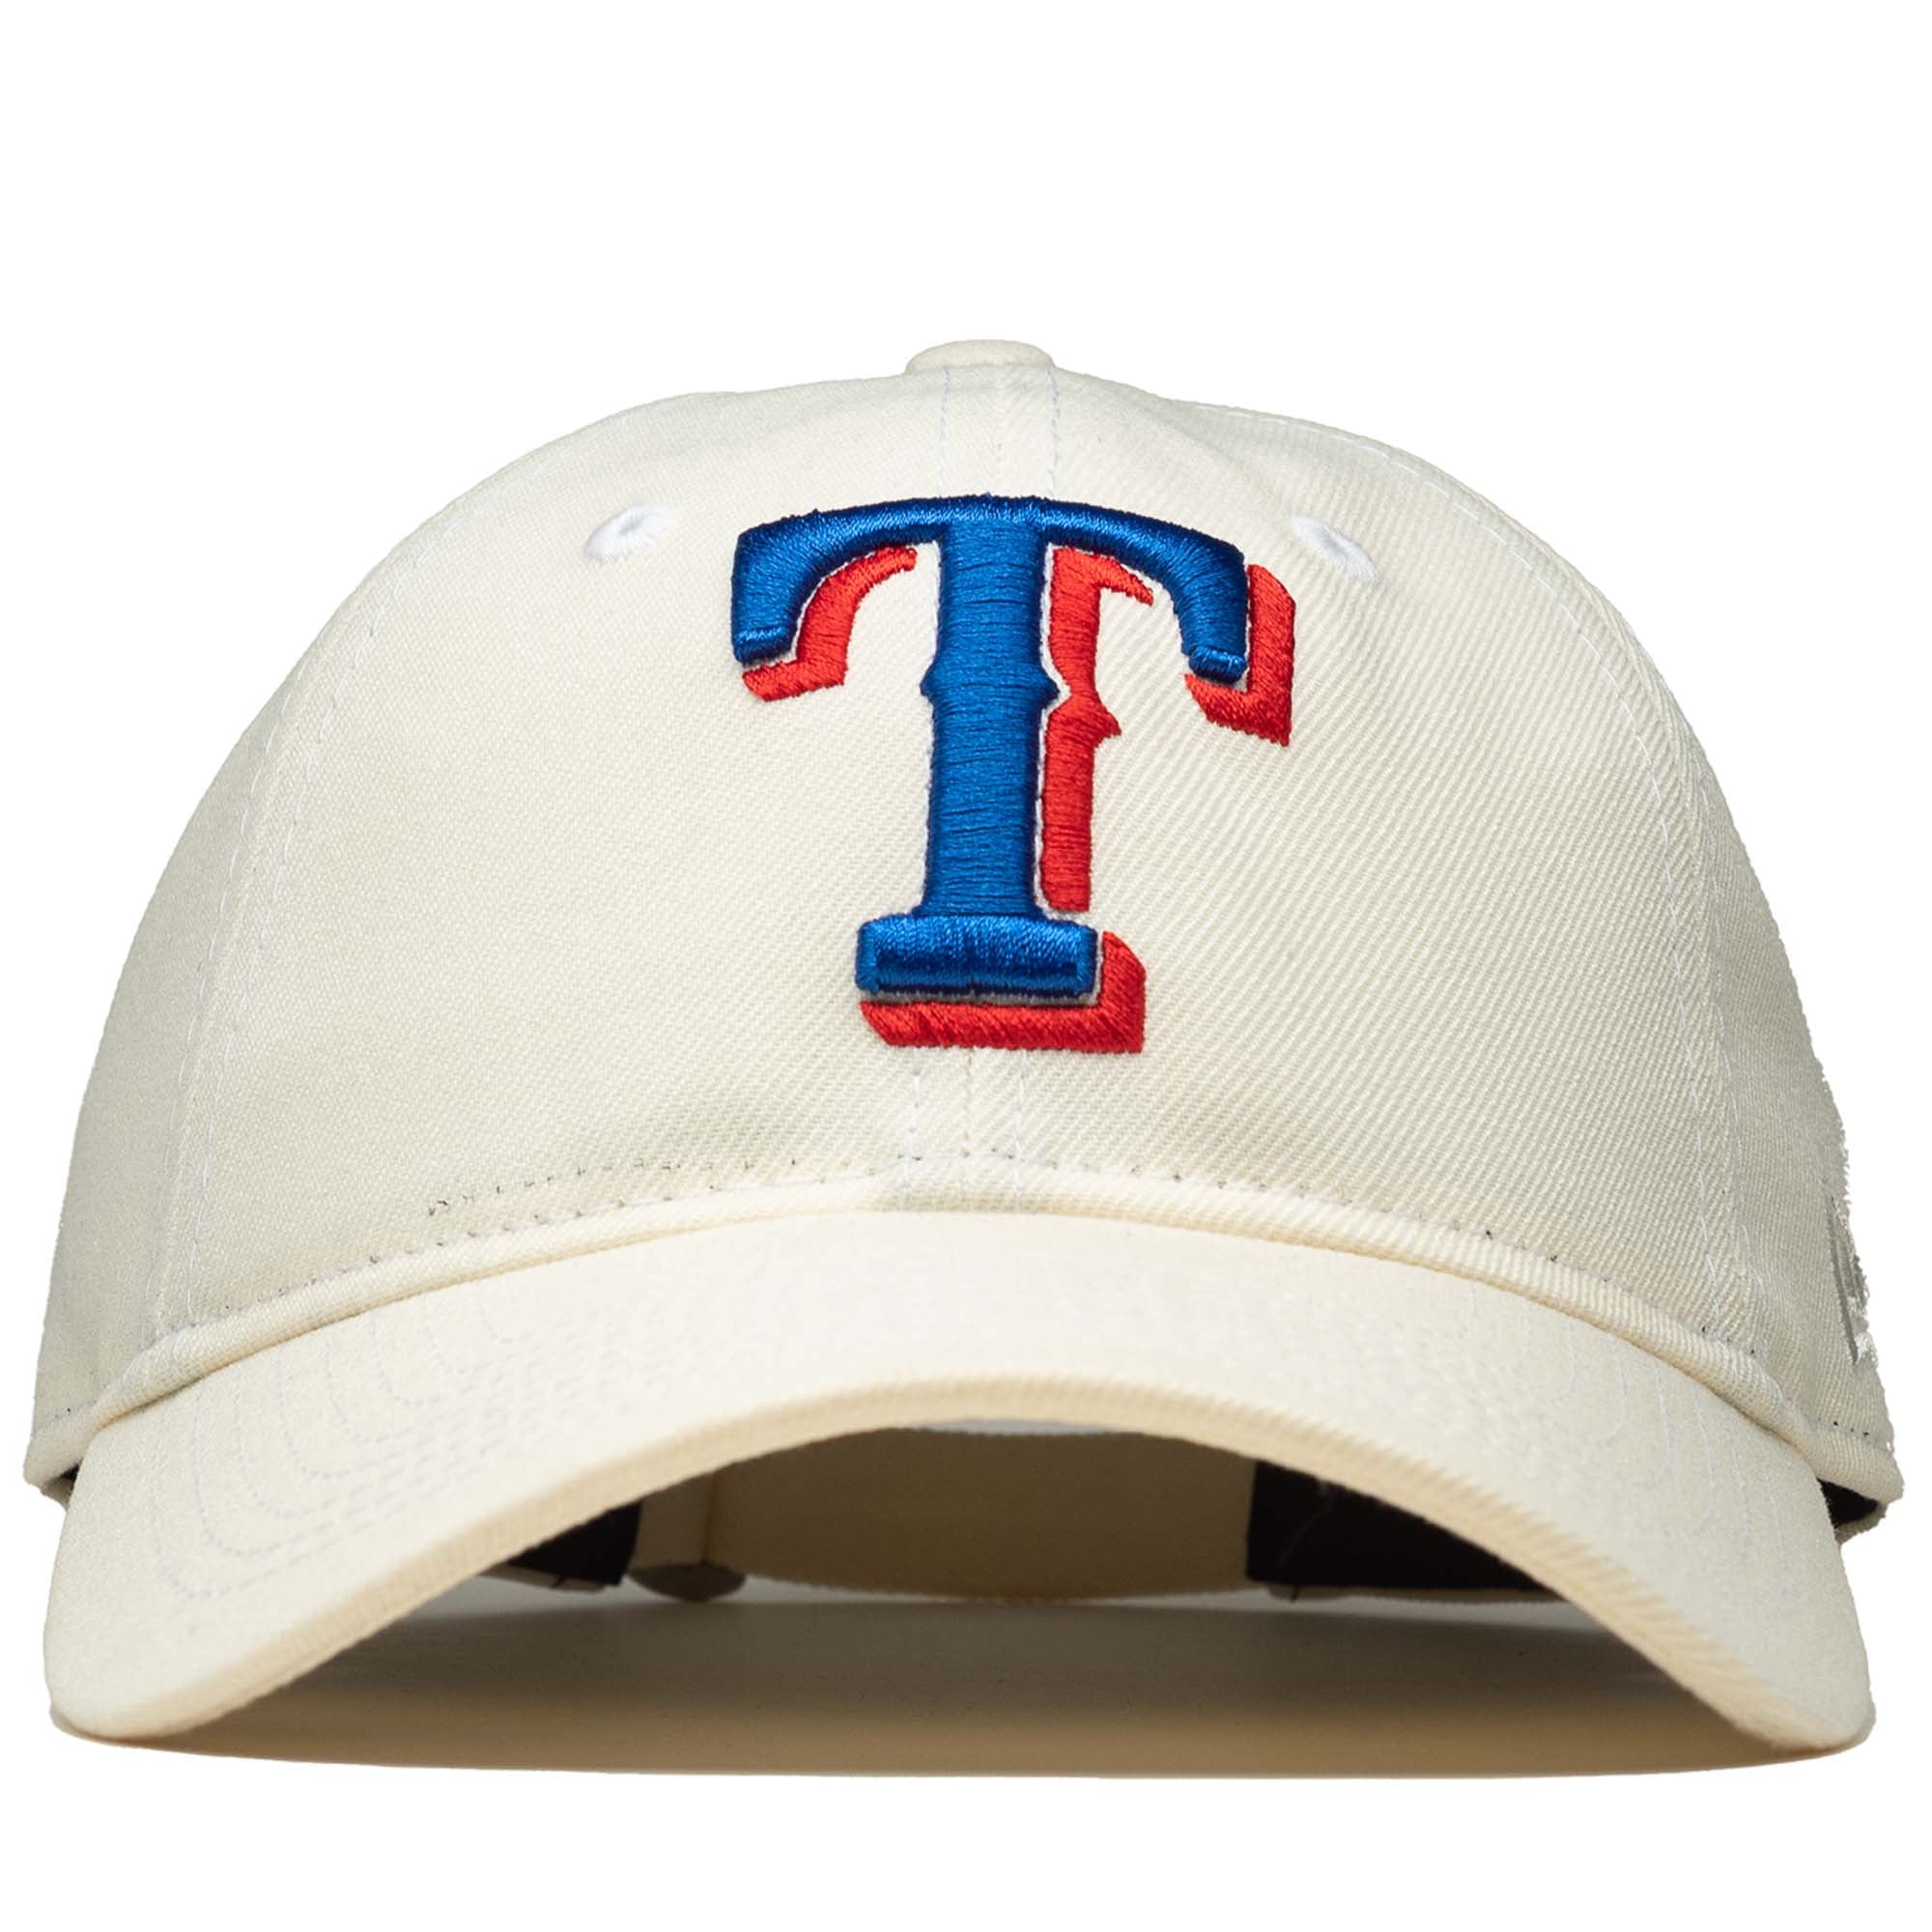 Texas Rangers Hats, Texas Rangers Caps, Texas Rangers Lids & Texas